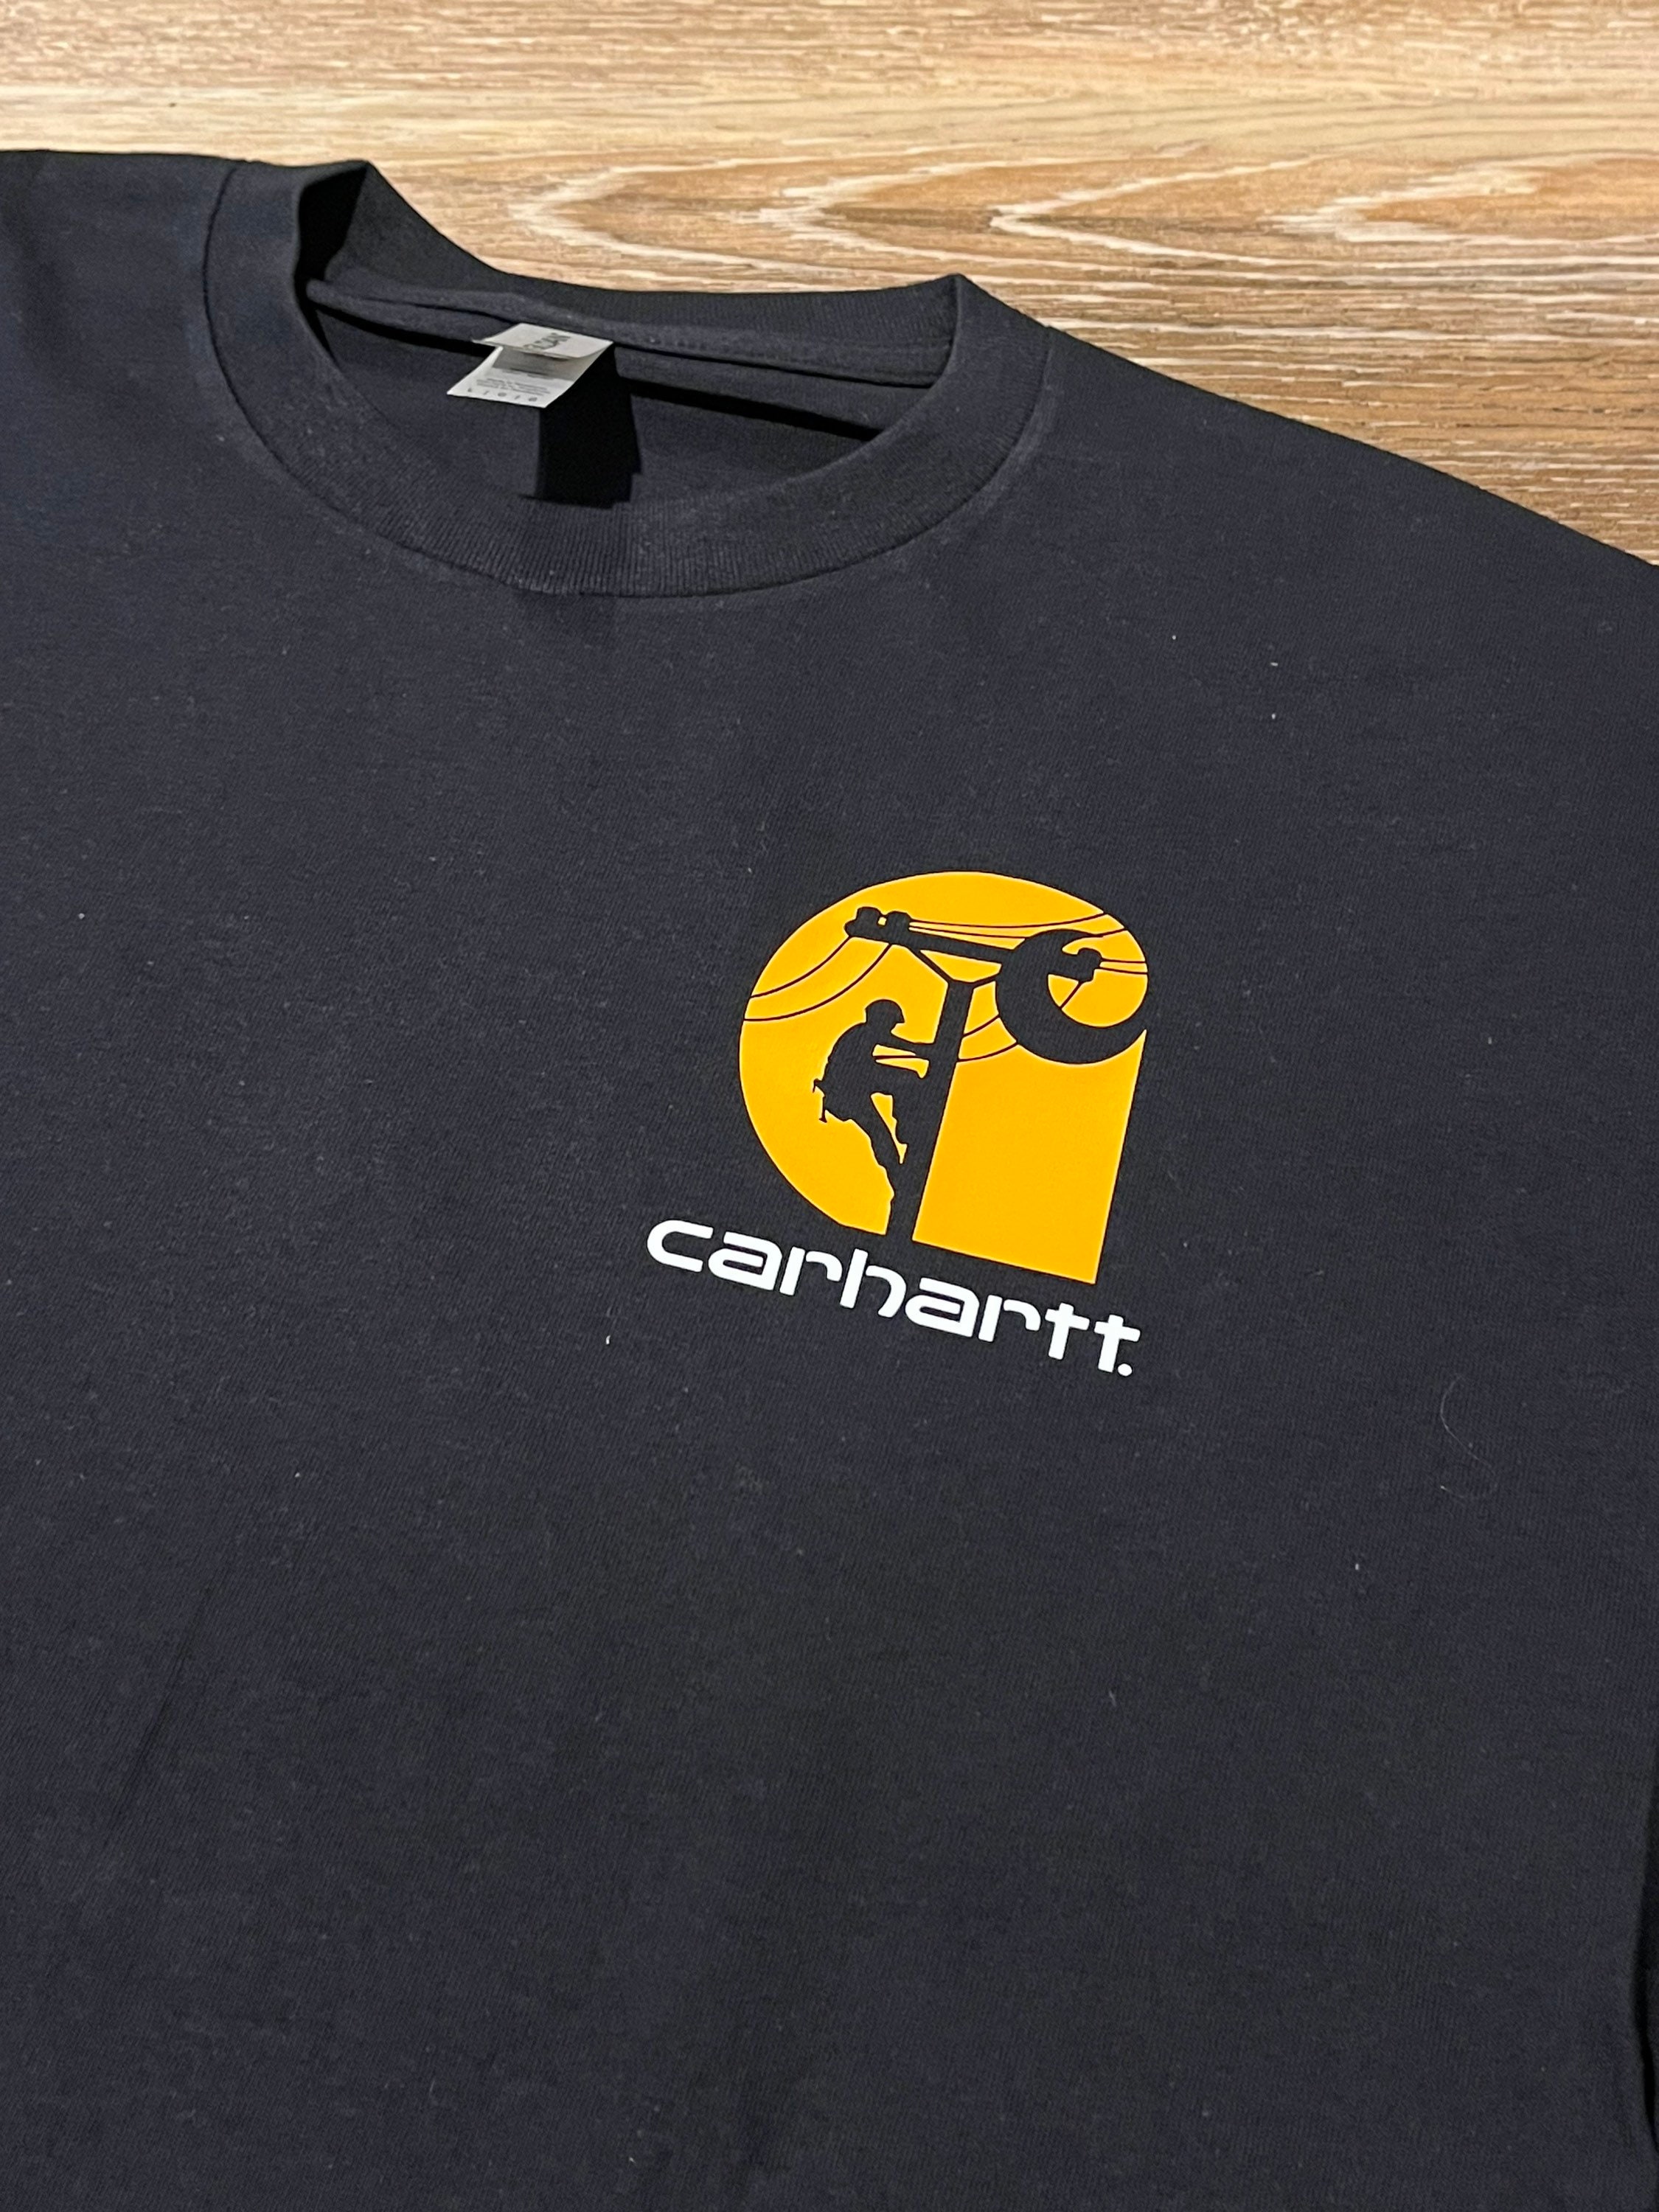 Carhartt Logo - Etsy | T-Shirts